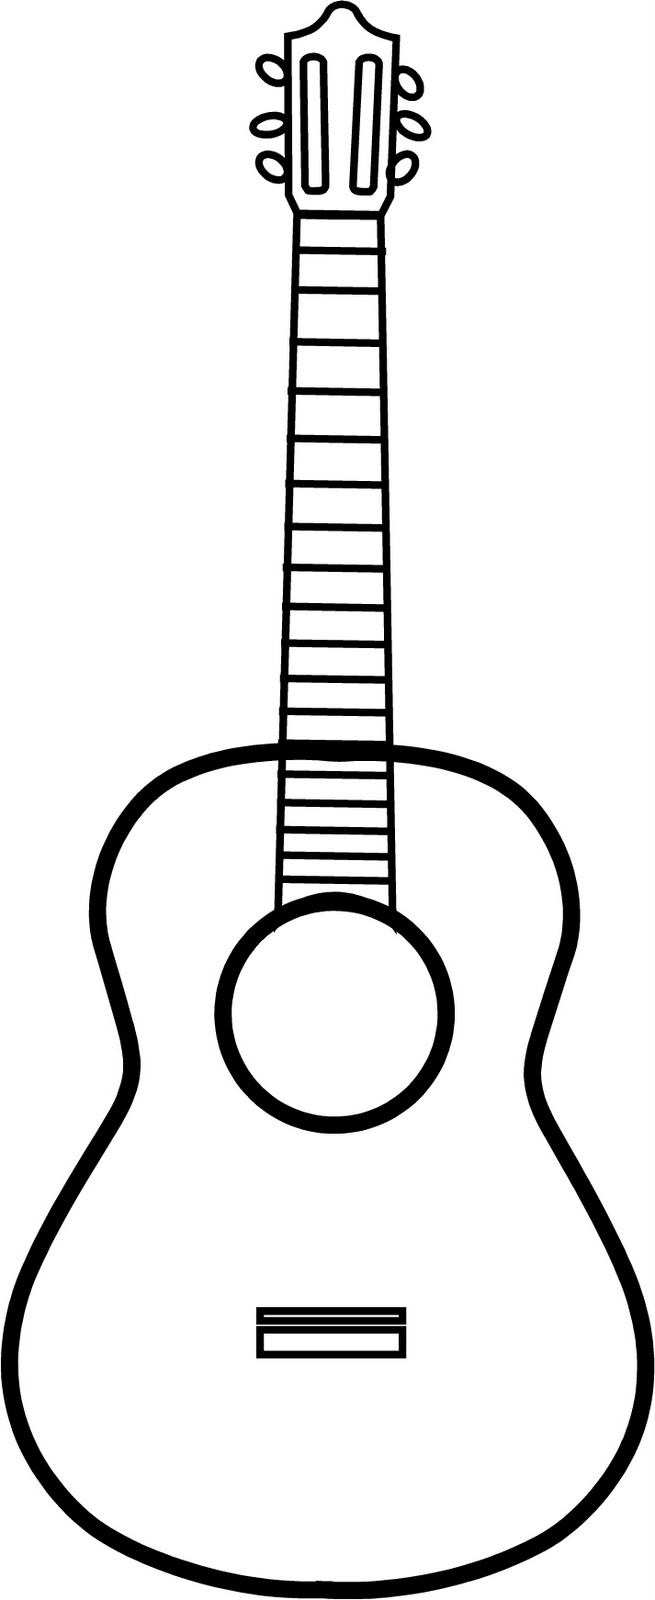 Guitar clipart outline - ClipartFox